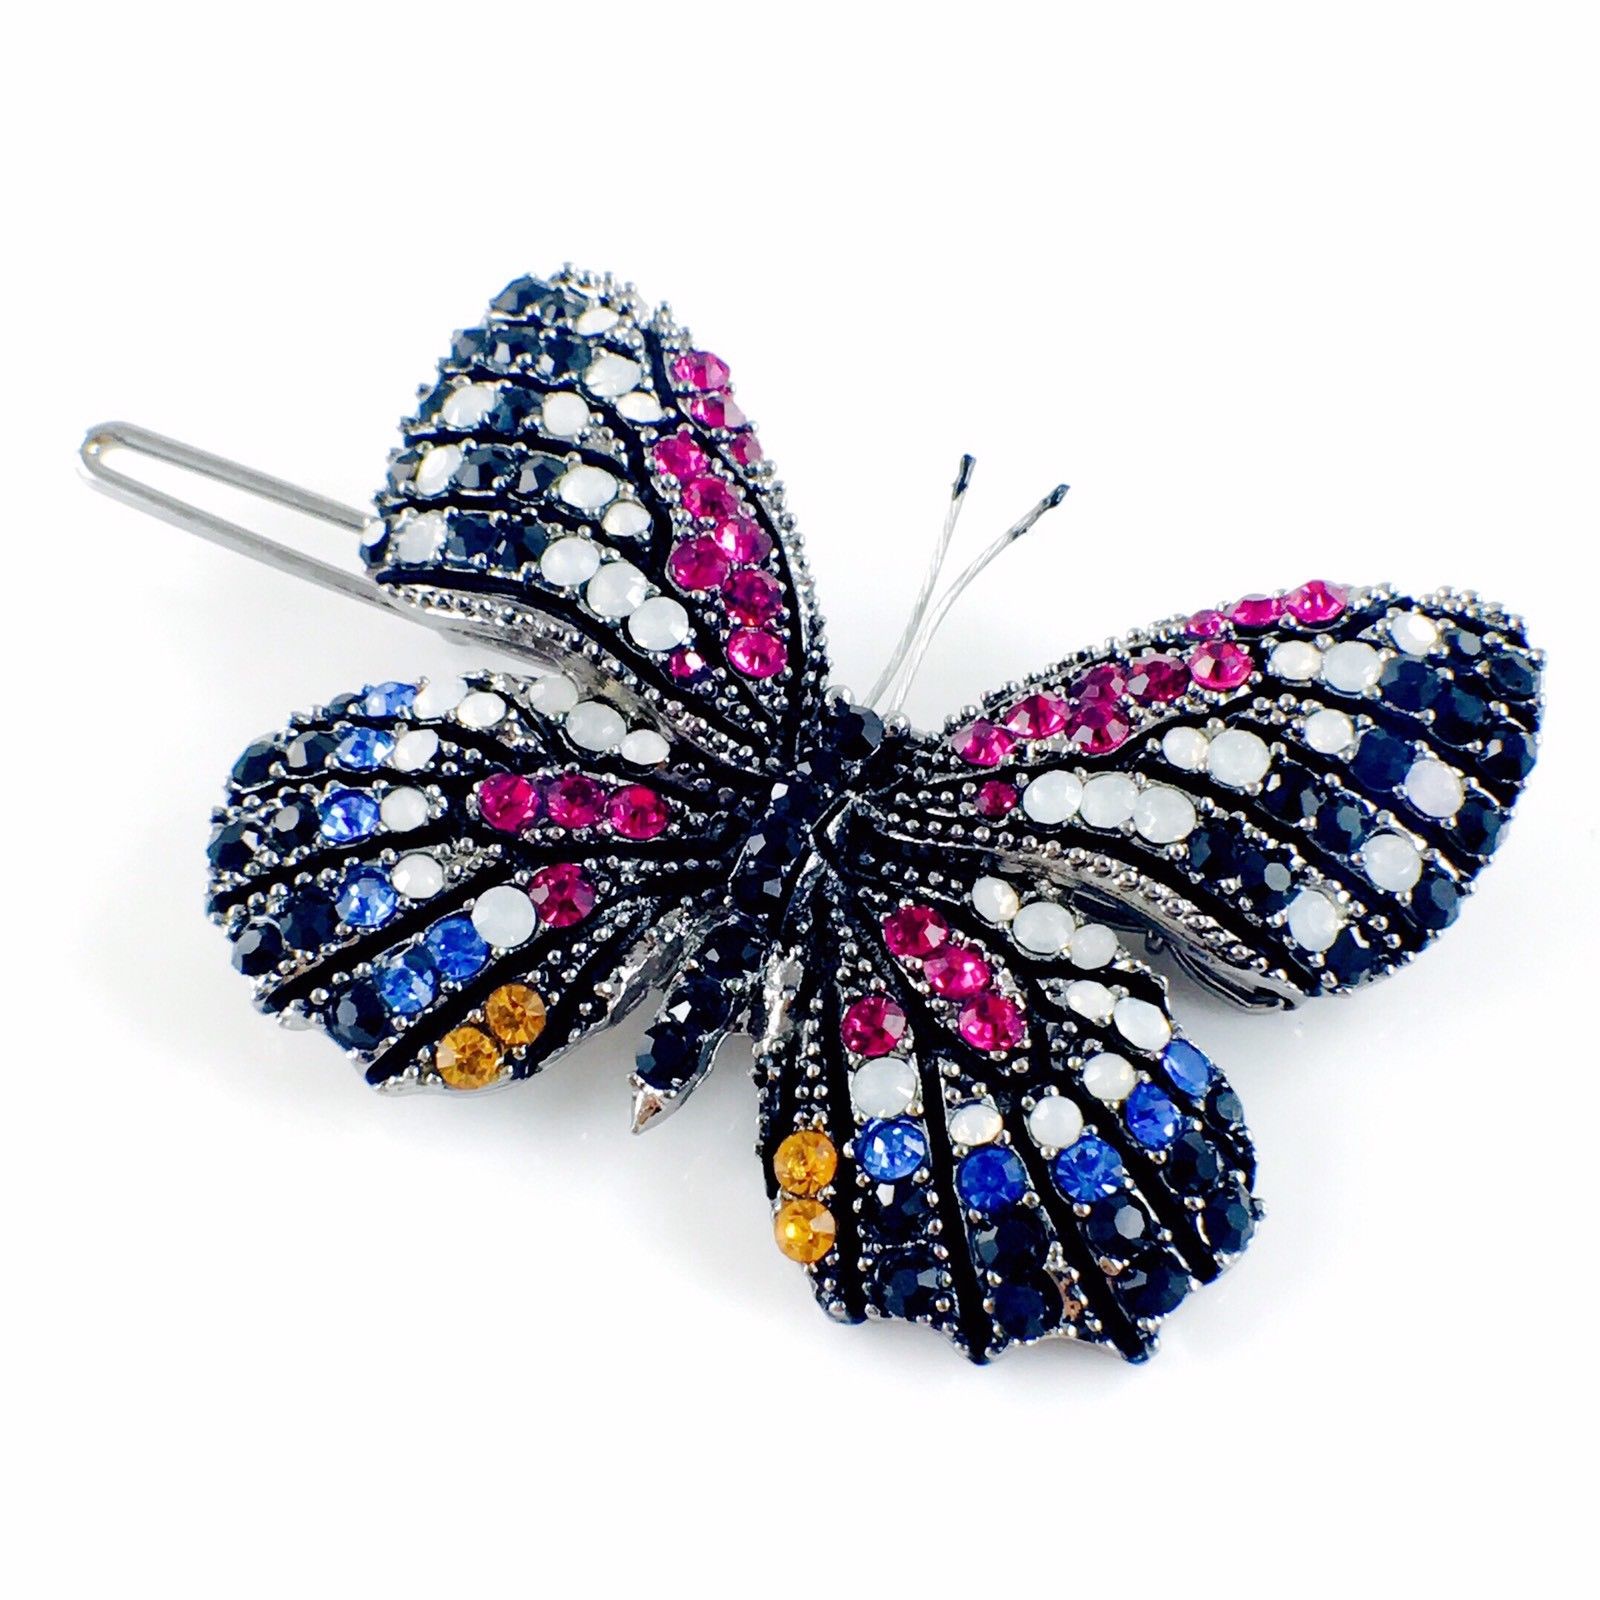 Fairy Butterfly Hair Clip use Swarovski Crystal metallic black base multi colors Blue Fuchsia Brown White Black, Hair Clip - MOGHANT